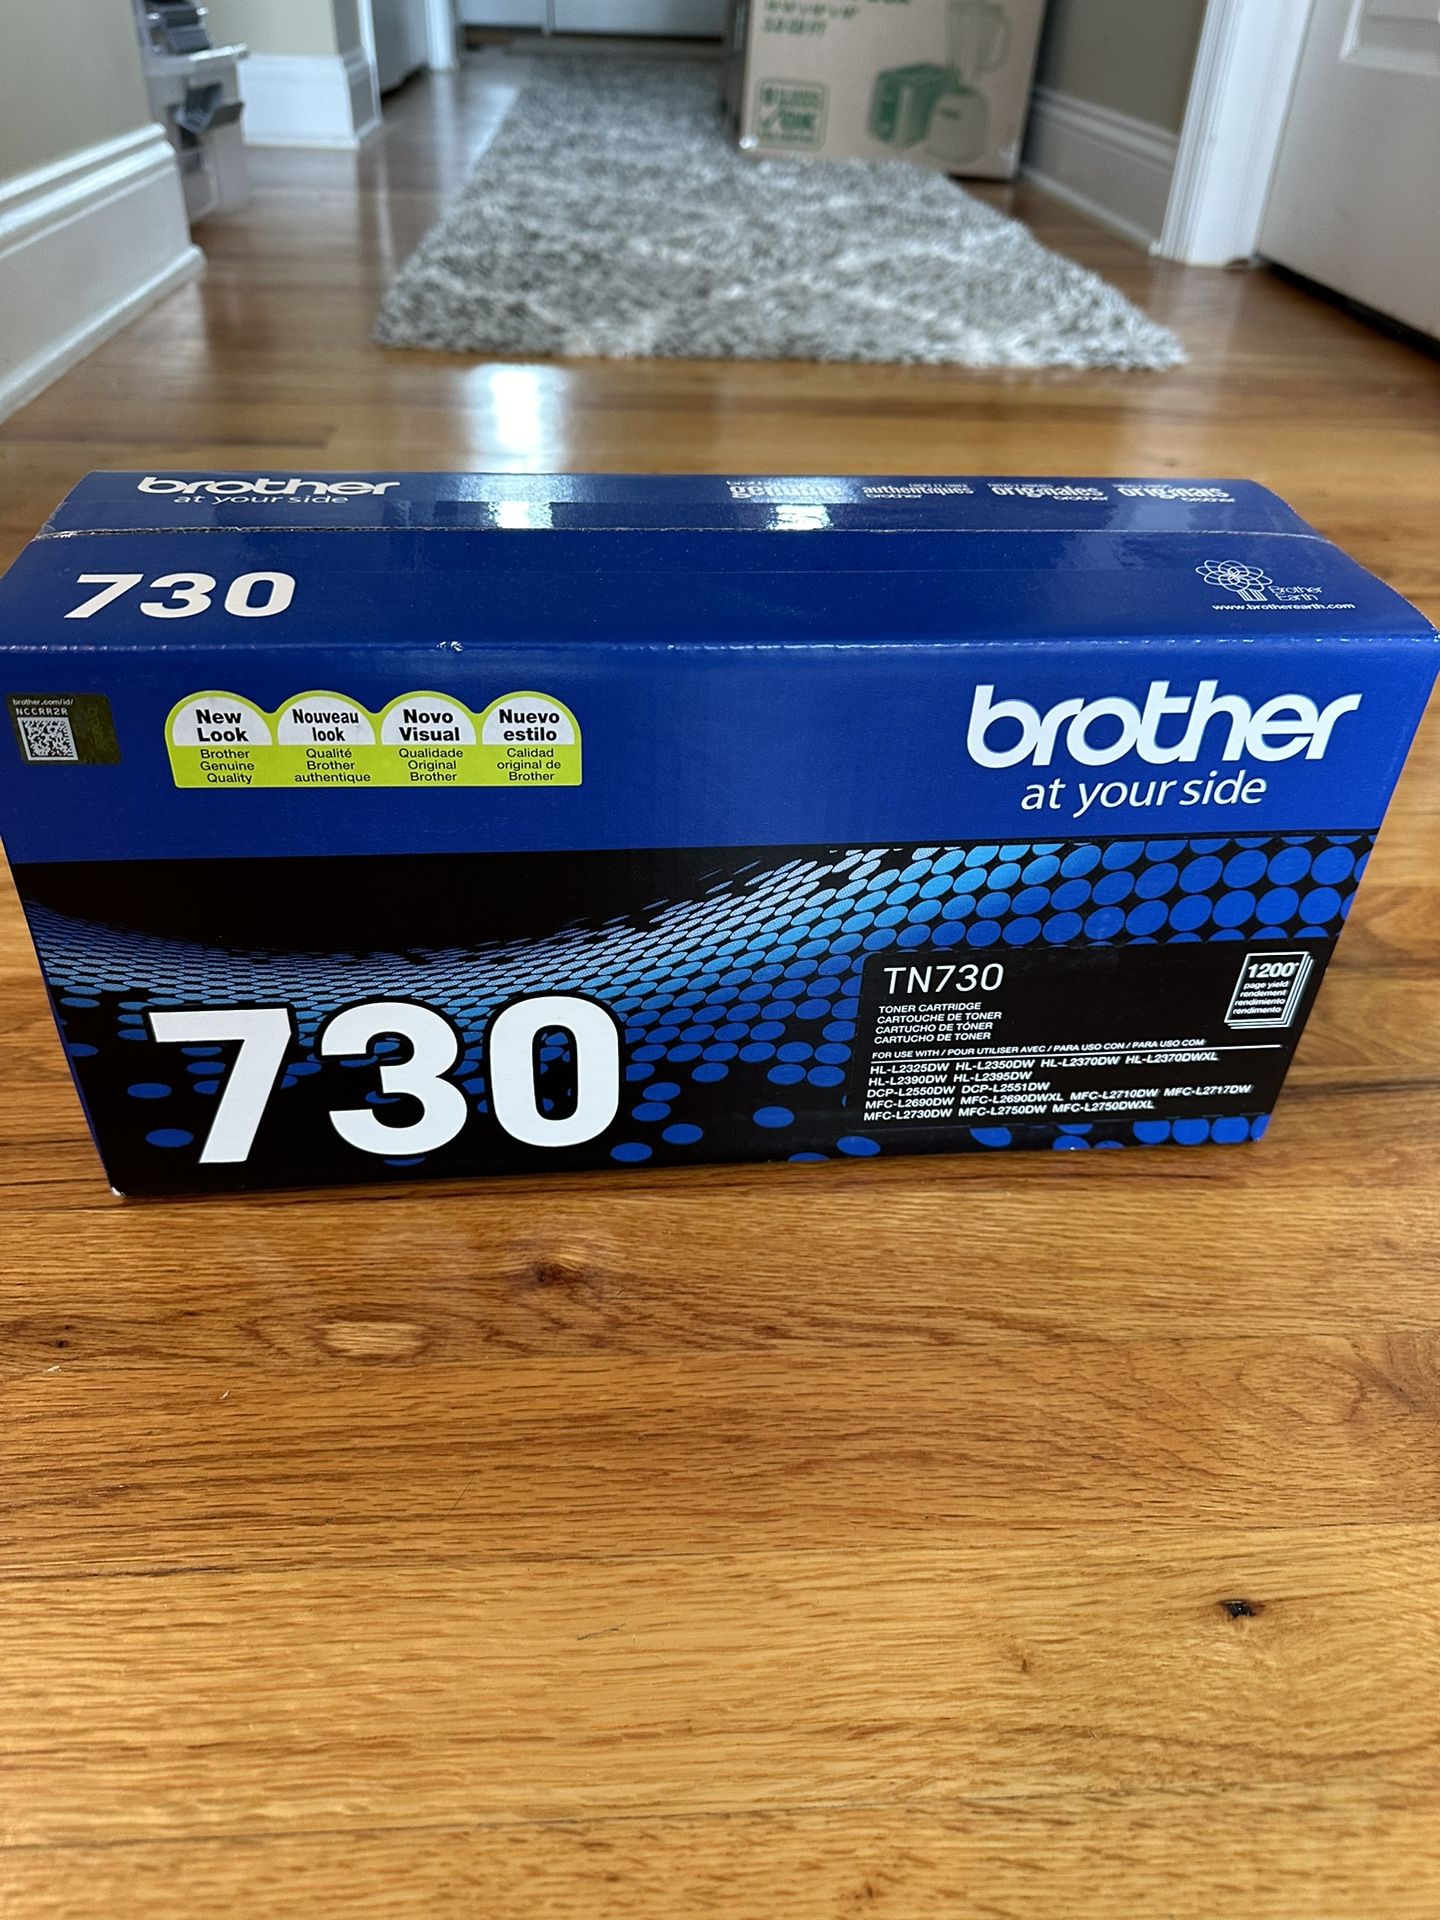 Brother TN730 Toner Cartridge - New